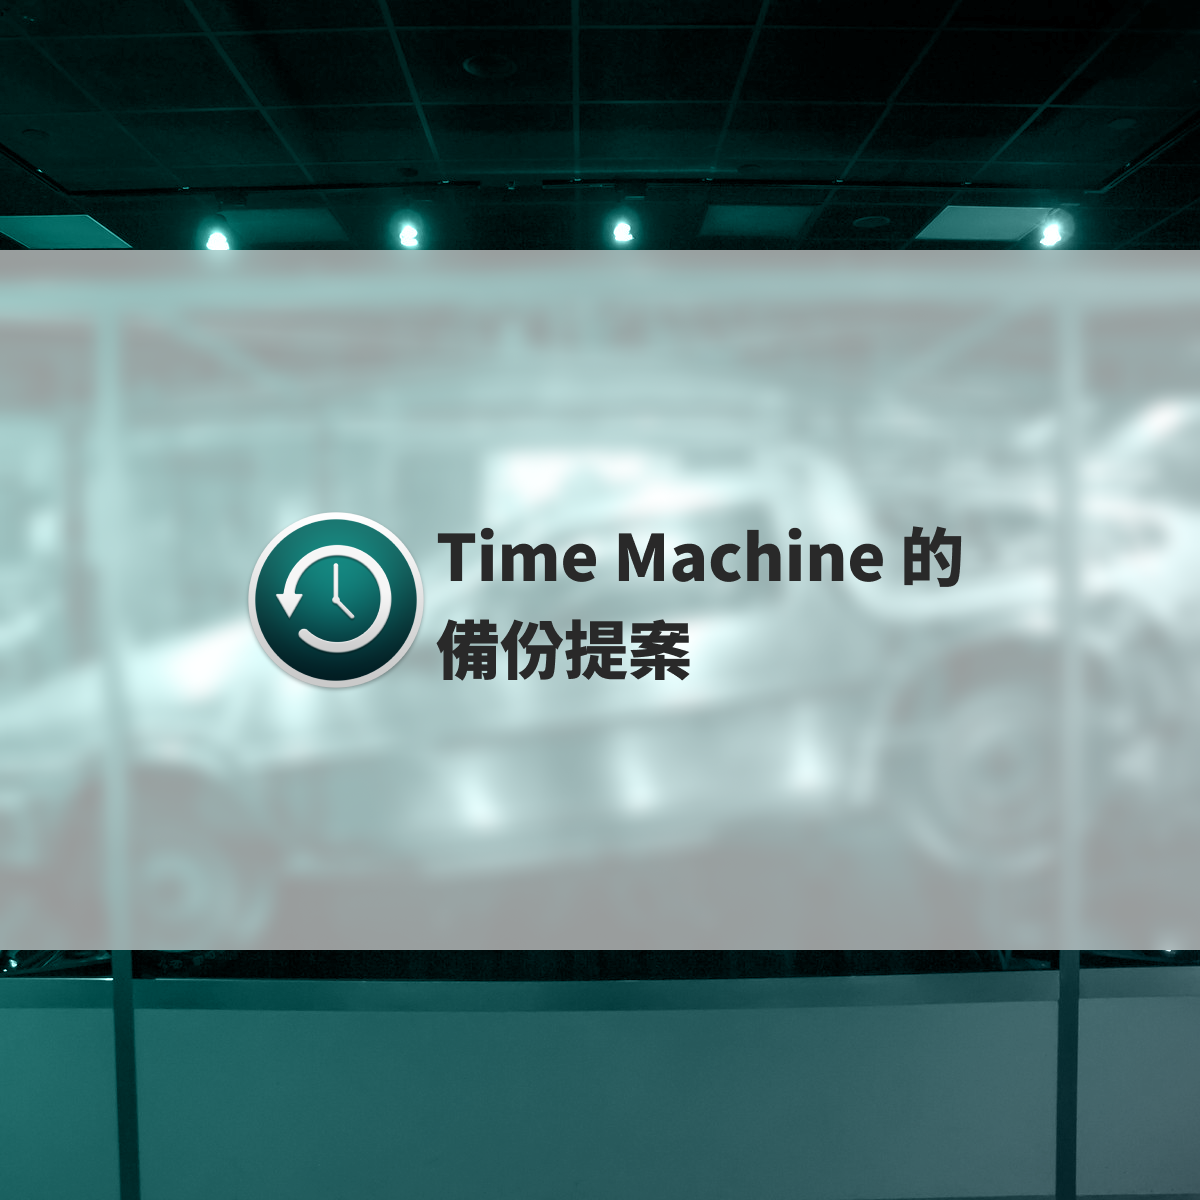 Time Machine 的備份提案